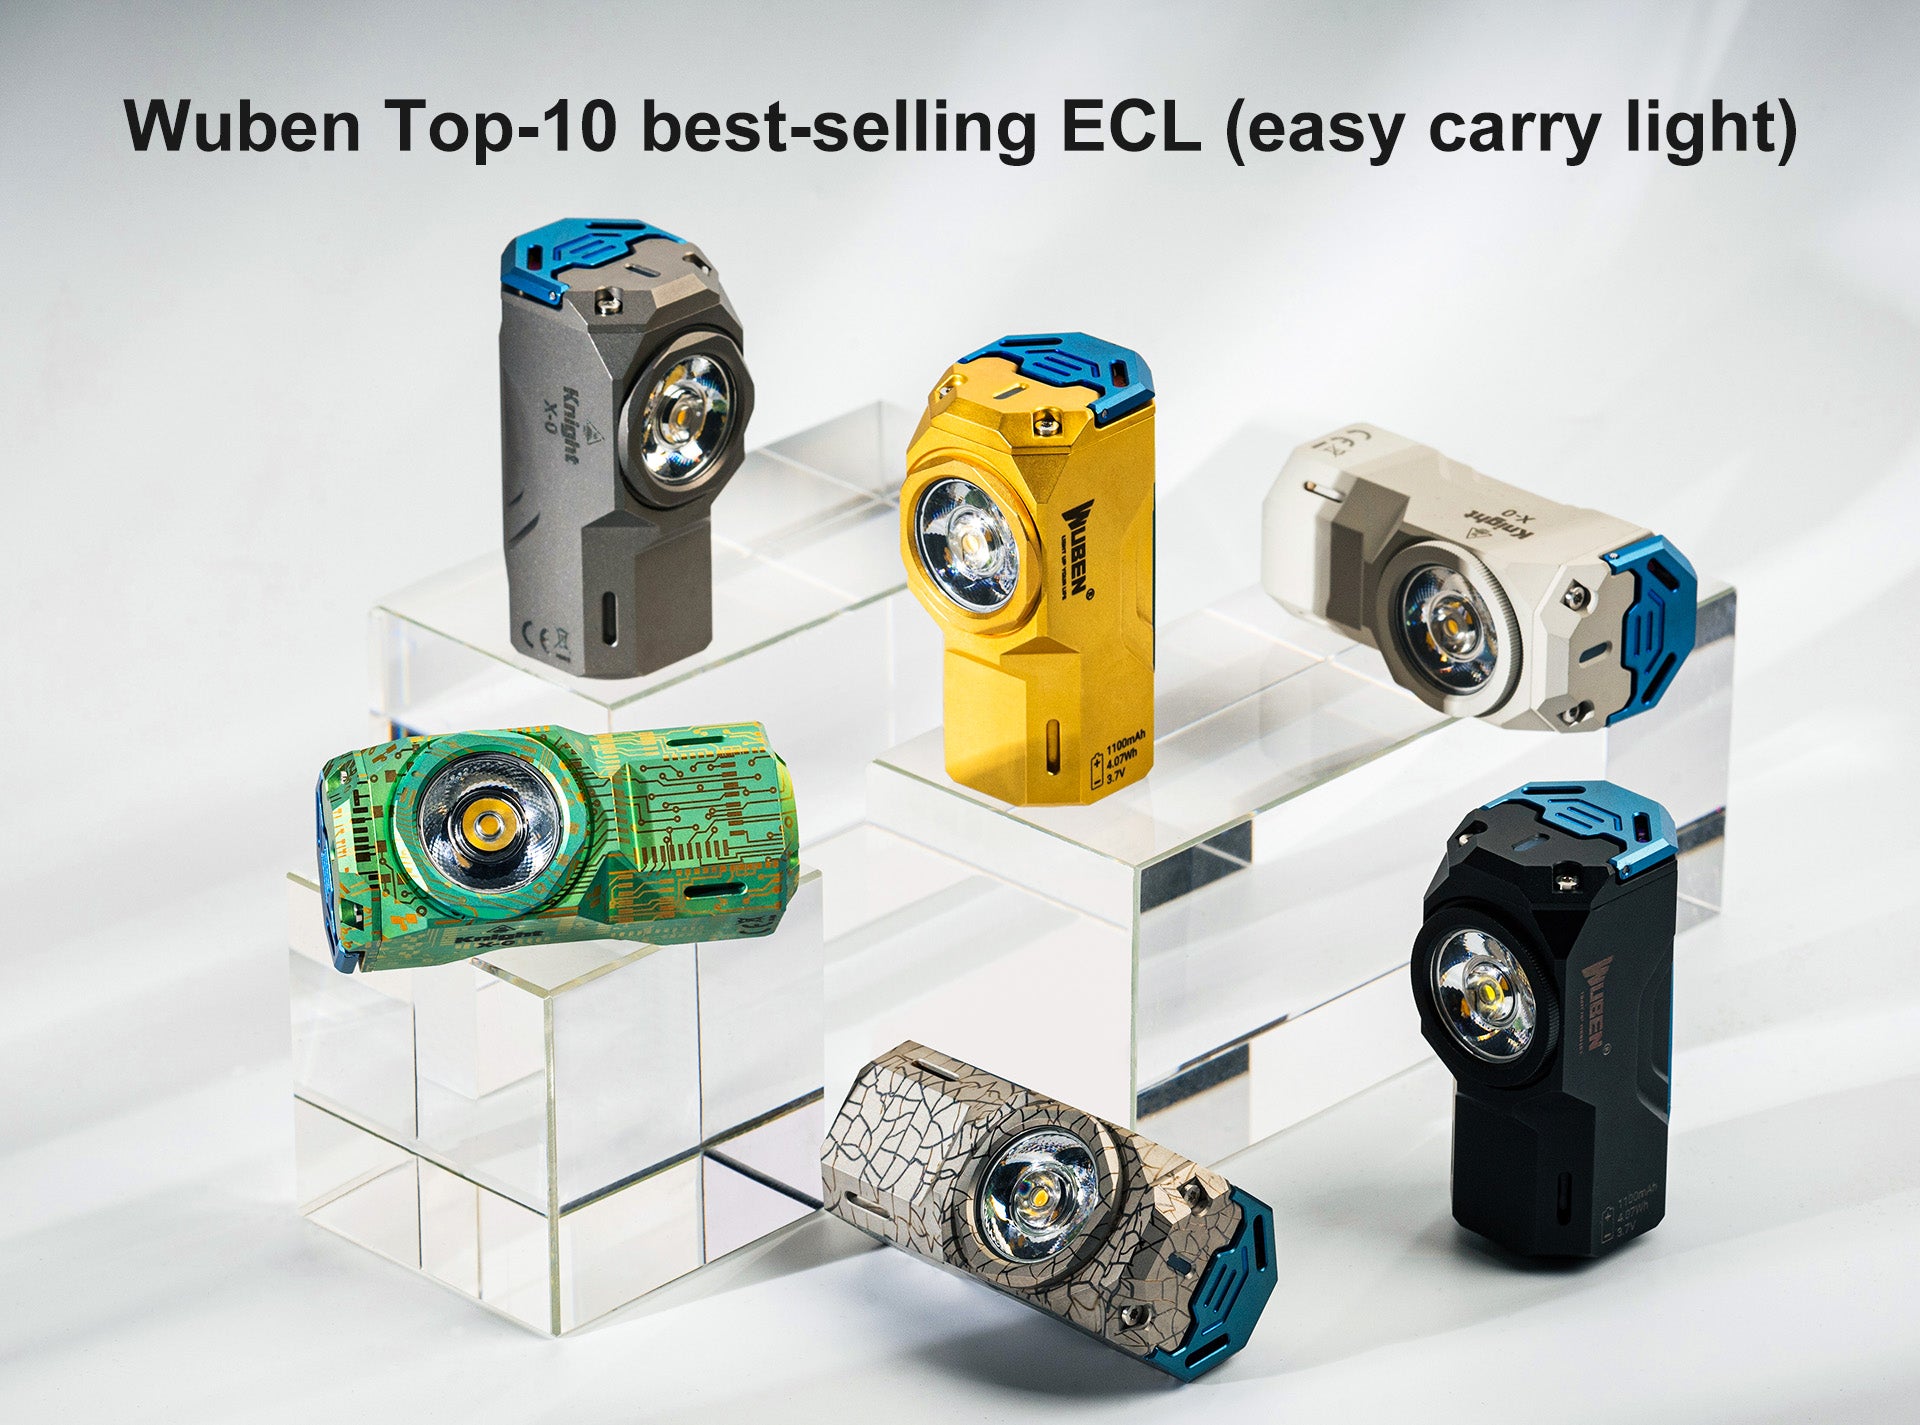 Wuben Top-10 best-selling easy carry light